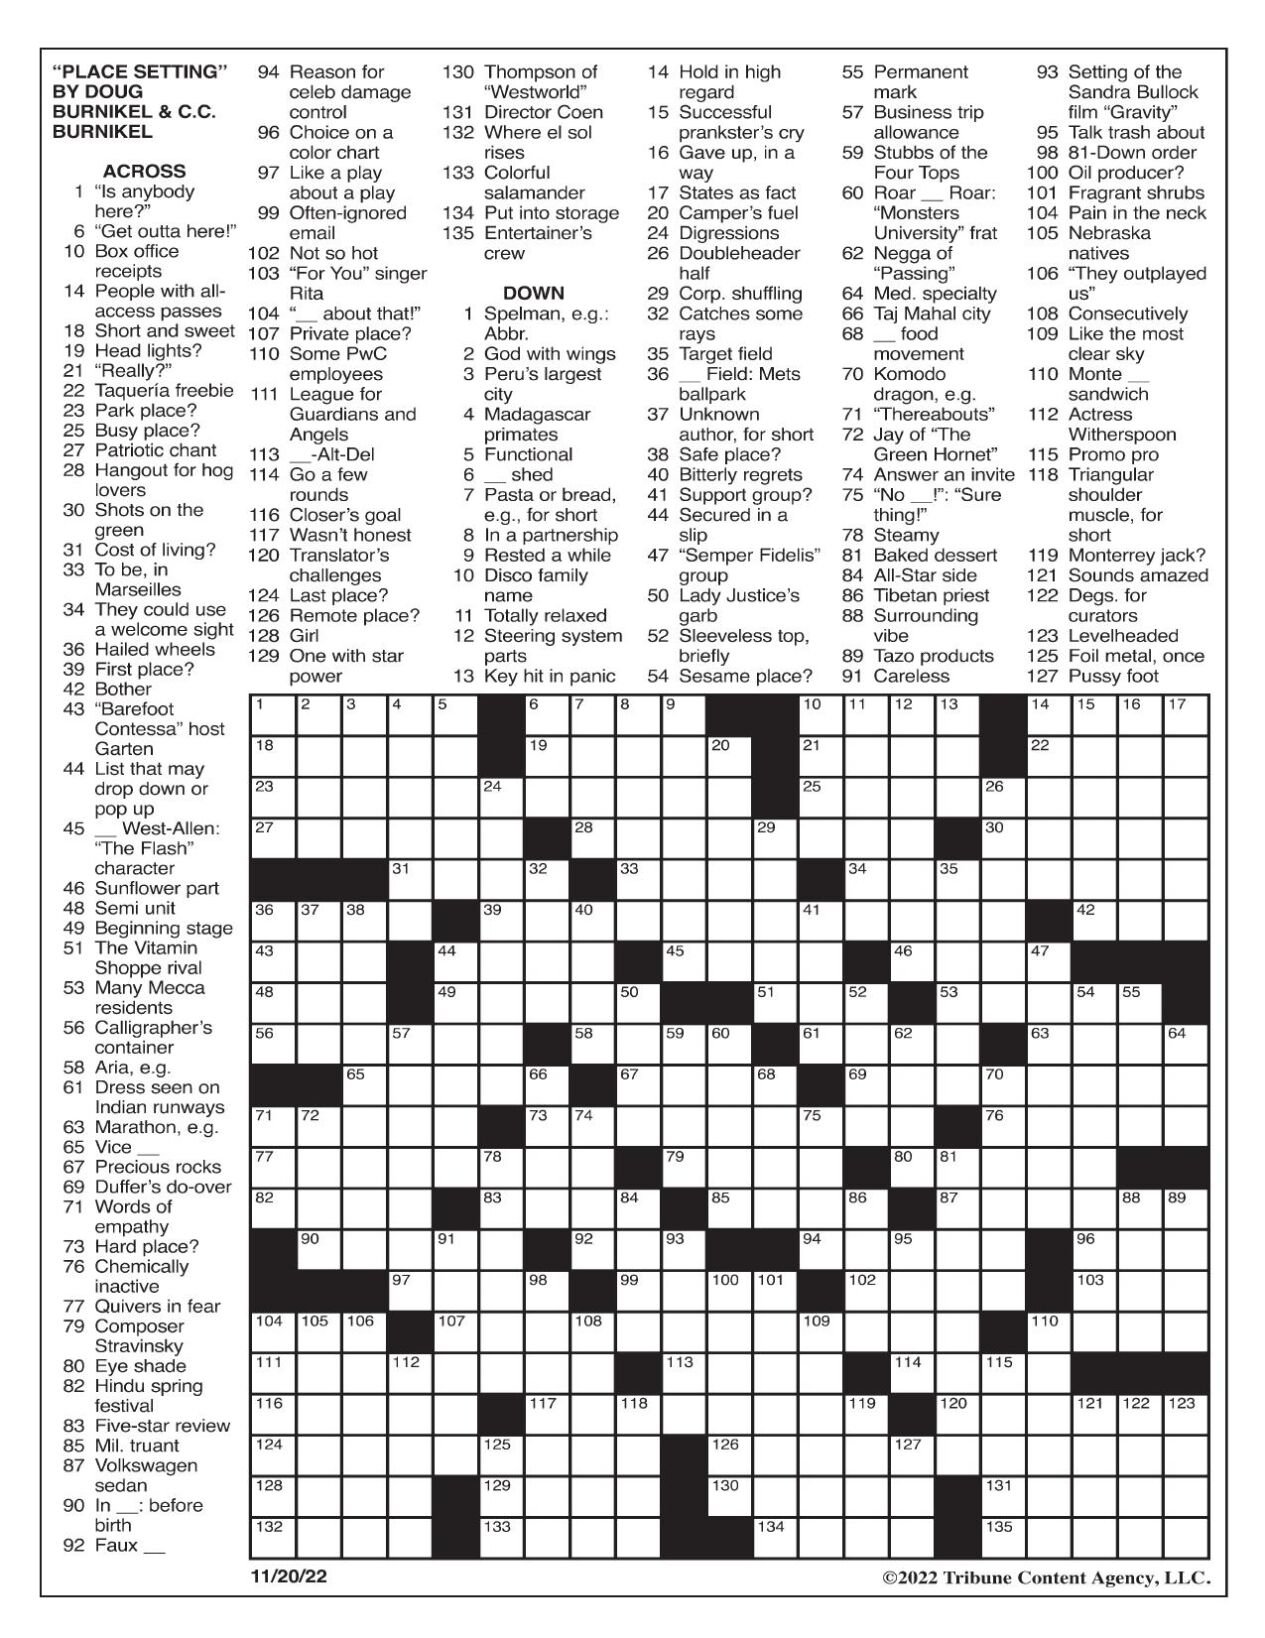 LA Times Crossword Answers Thursday December 8th 2022